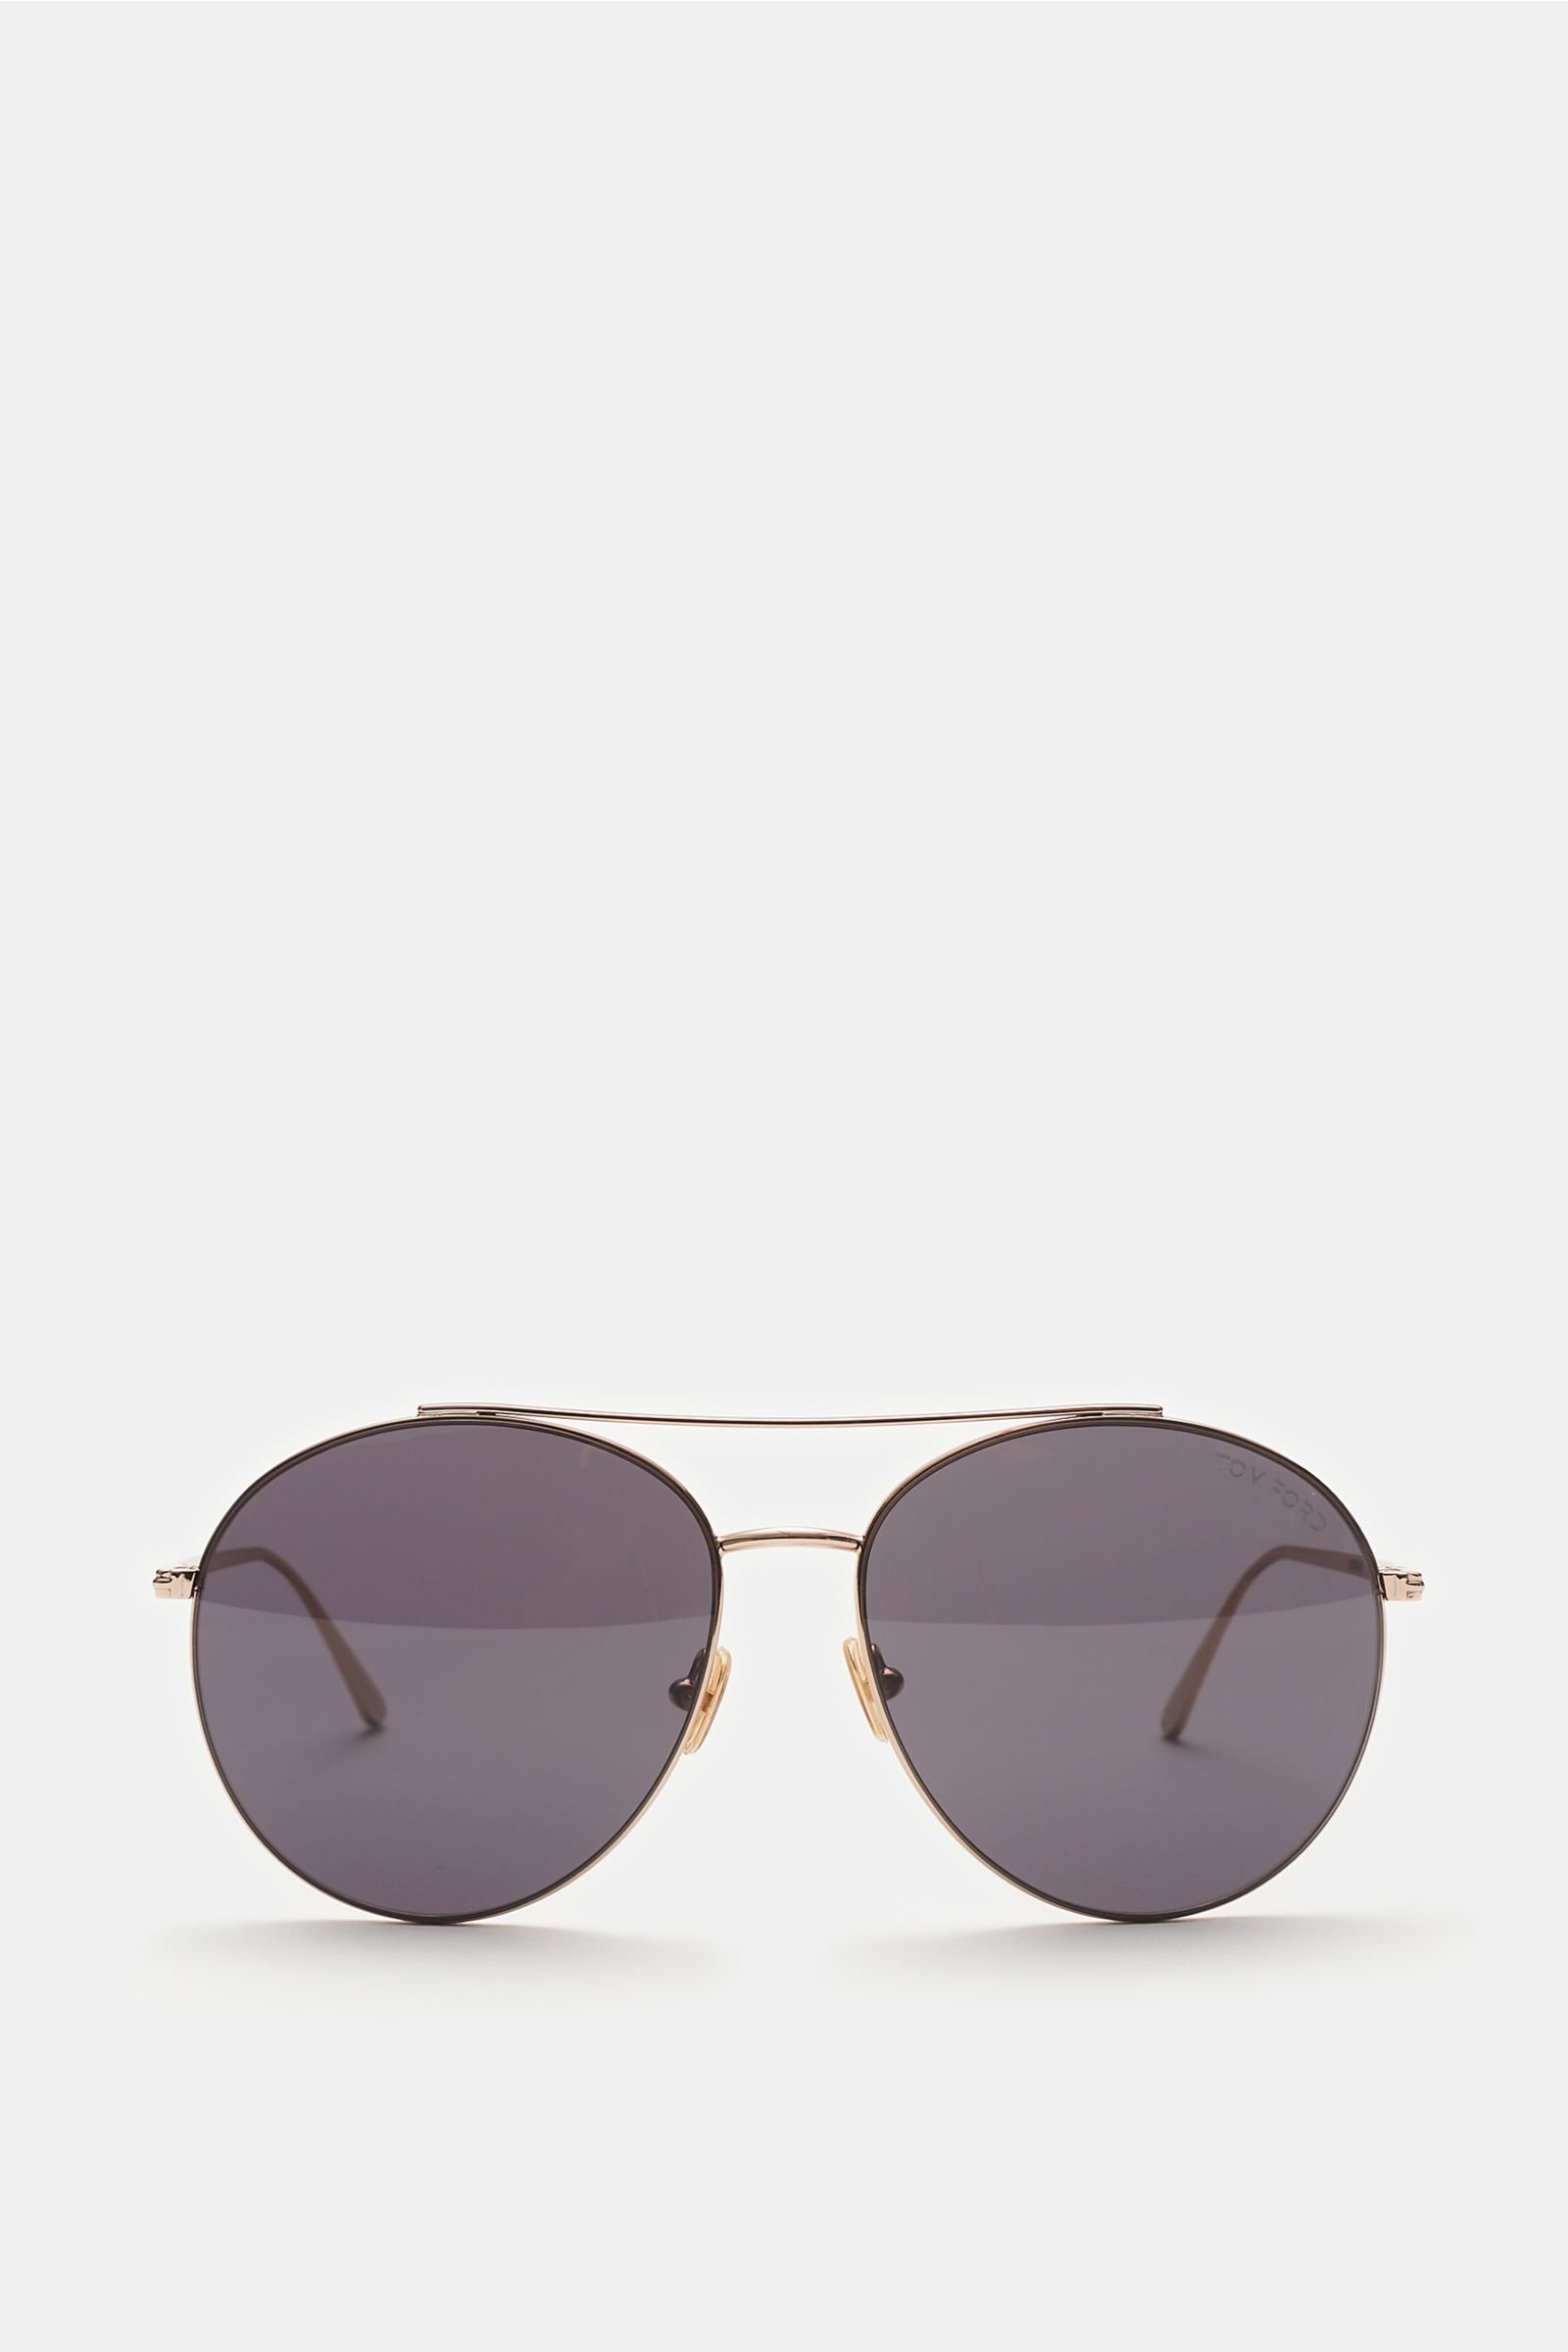 Sunglasses 'Cleo' rose gold/grey